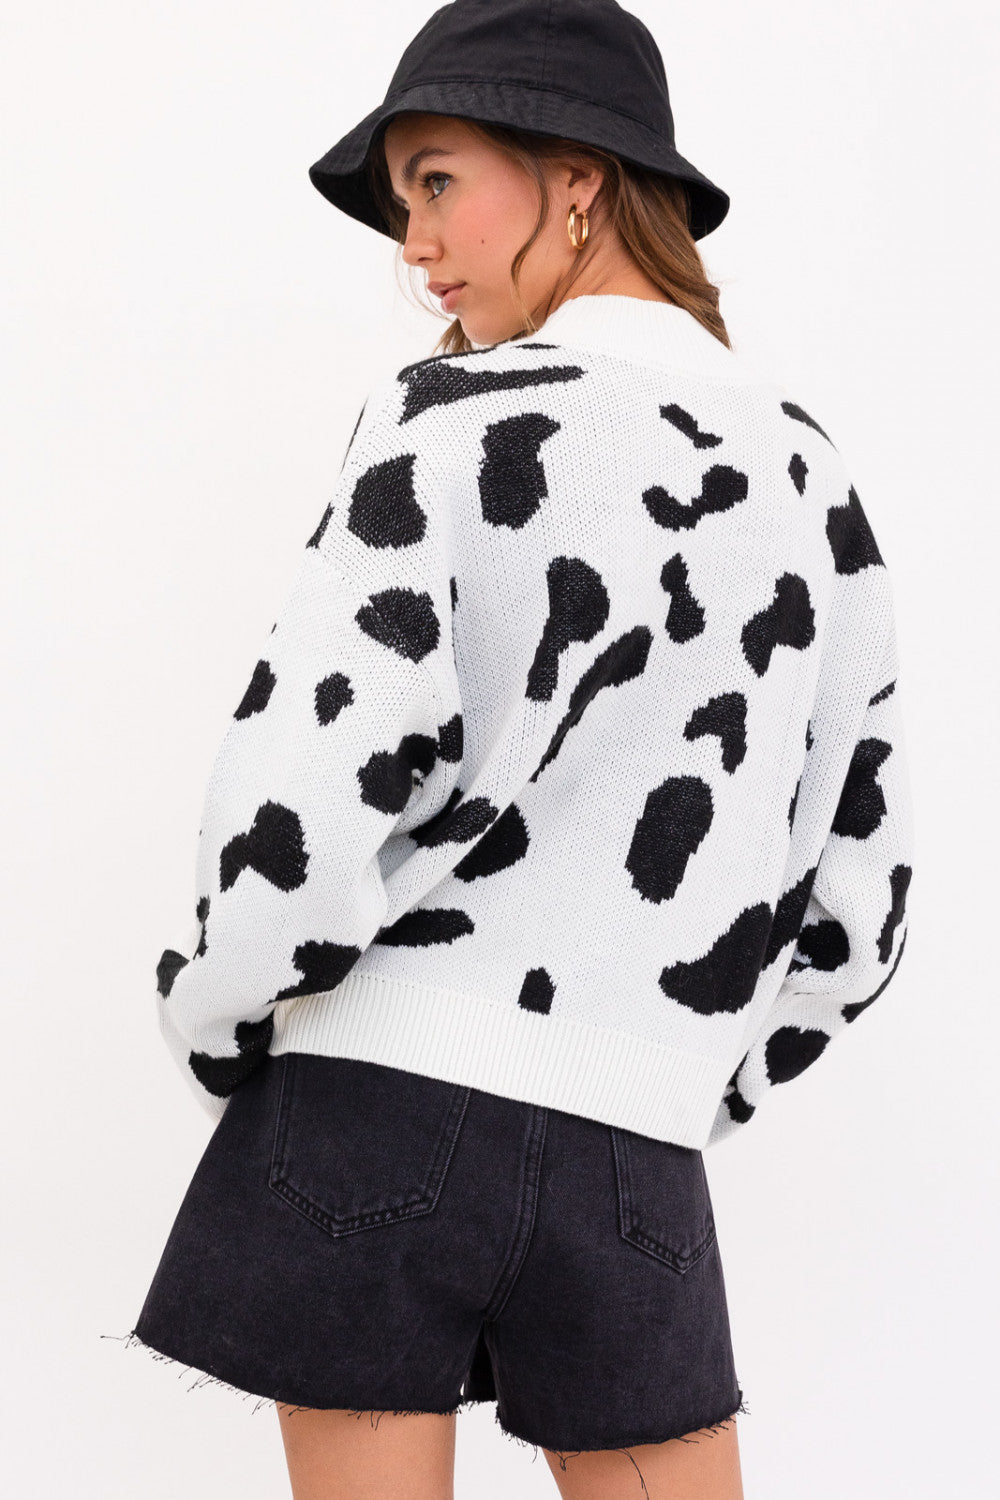 Black and White Animal Print Sweater